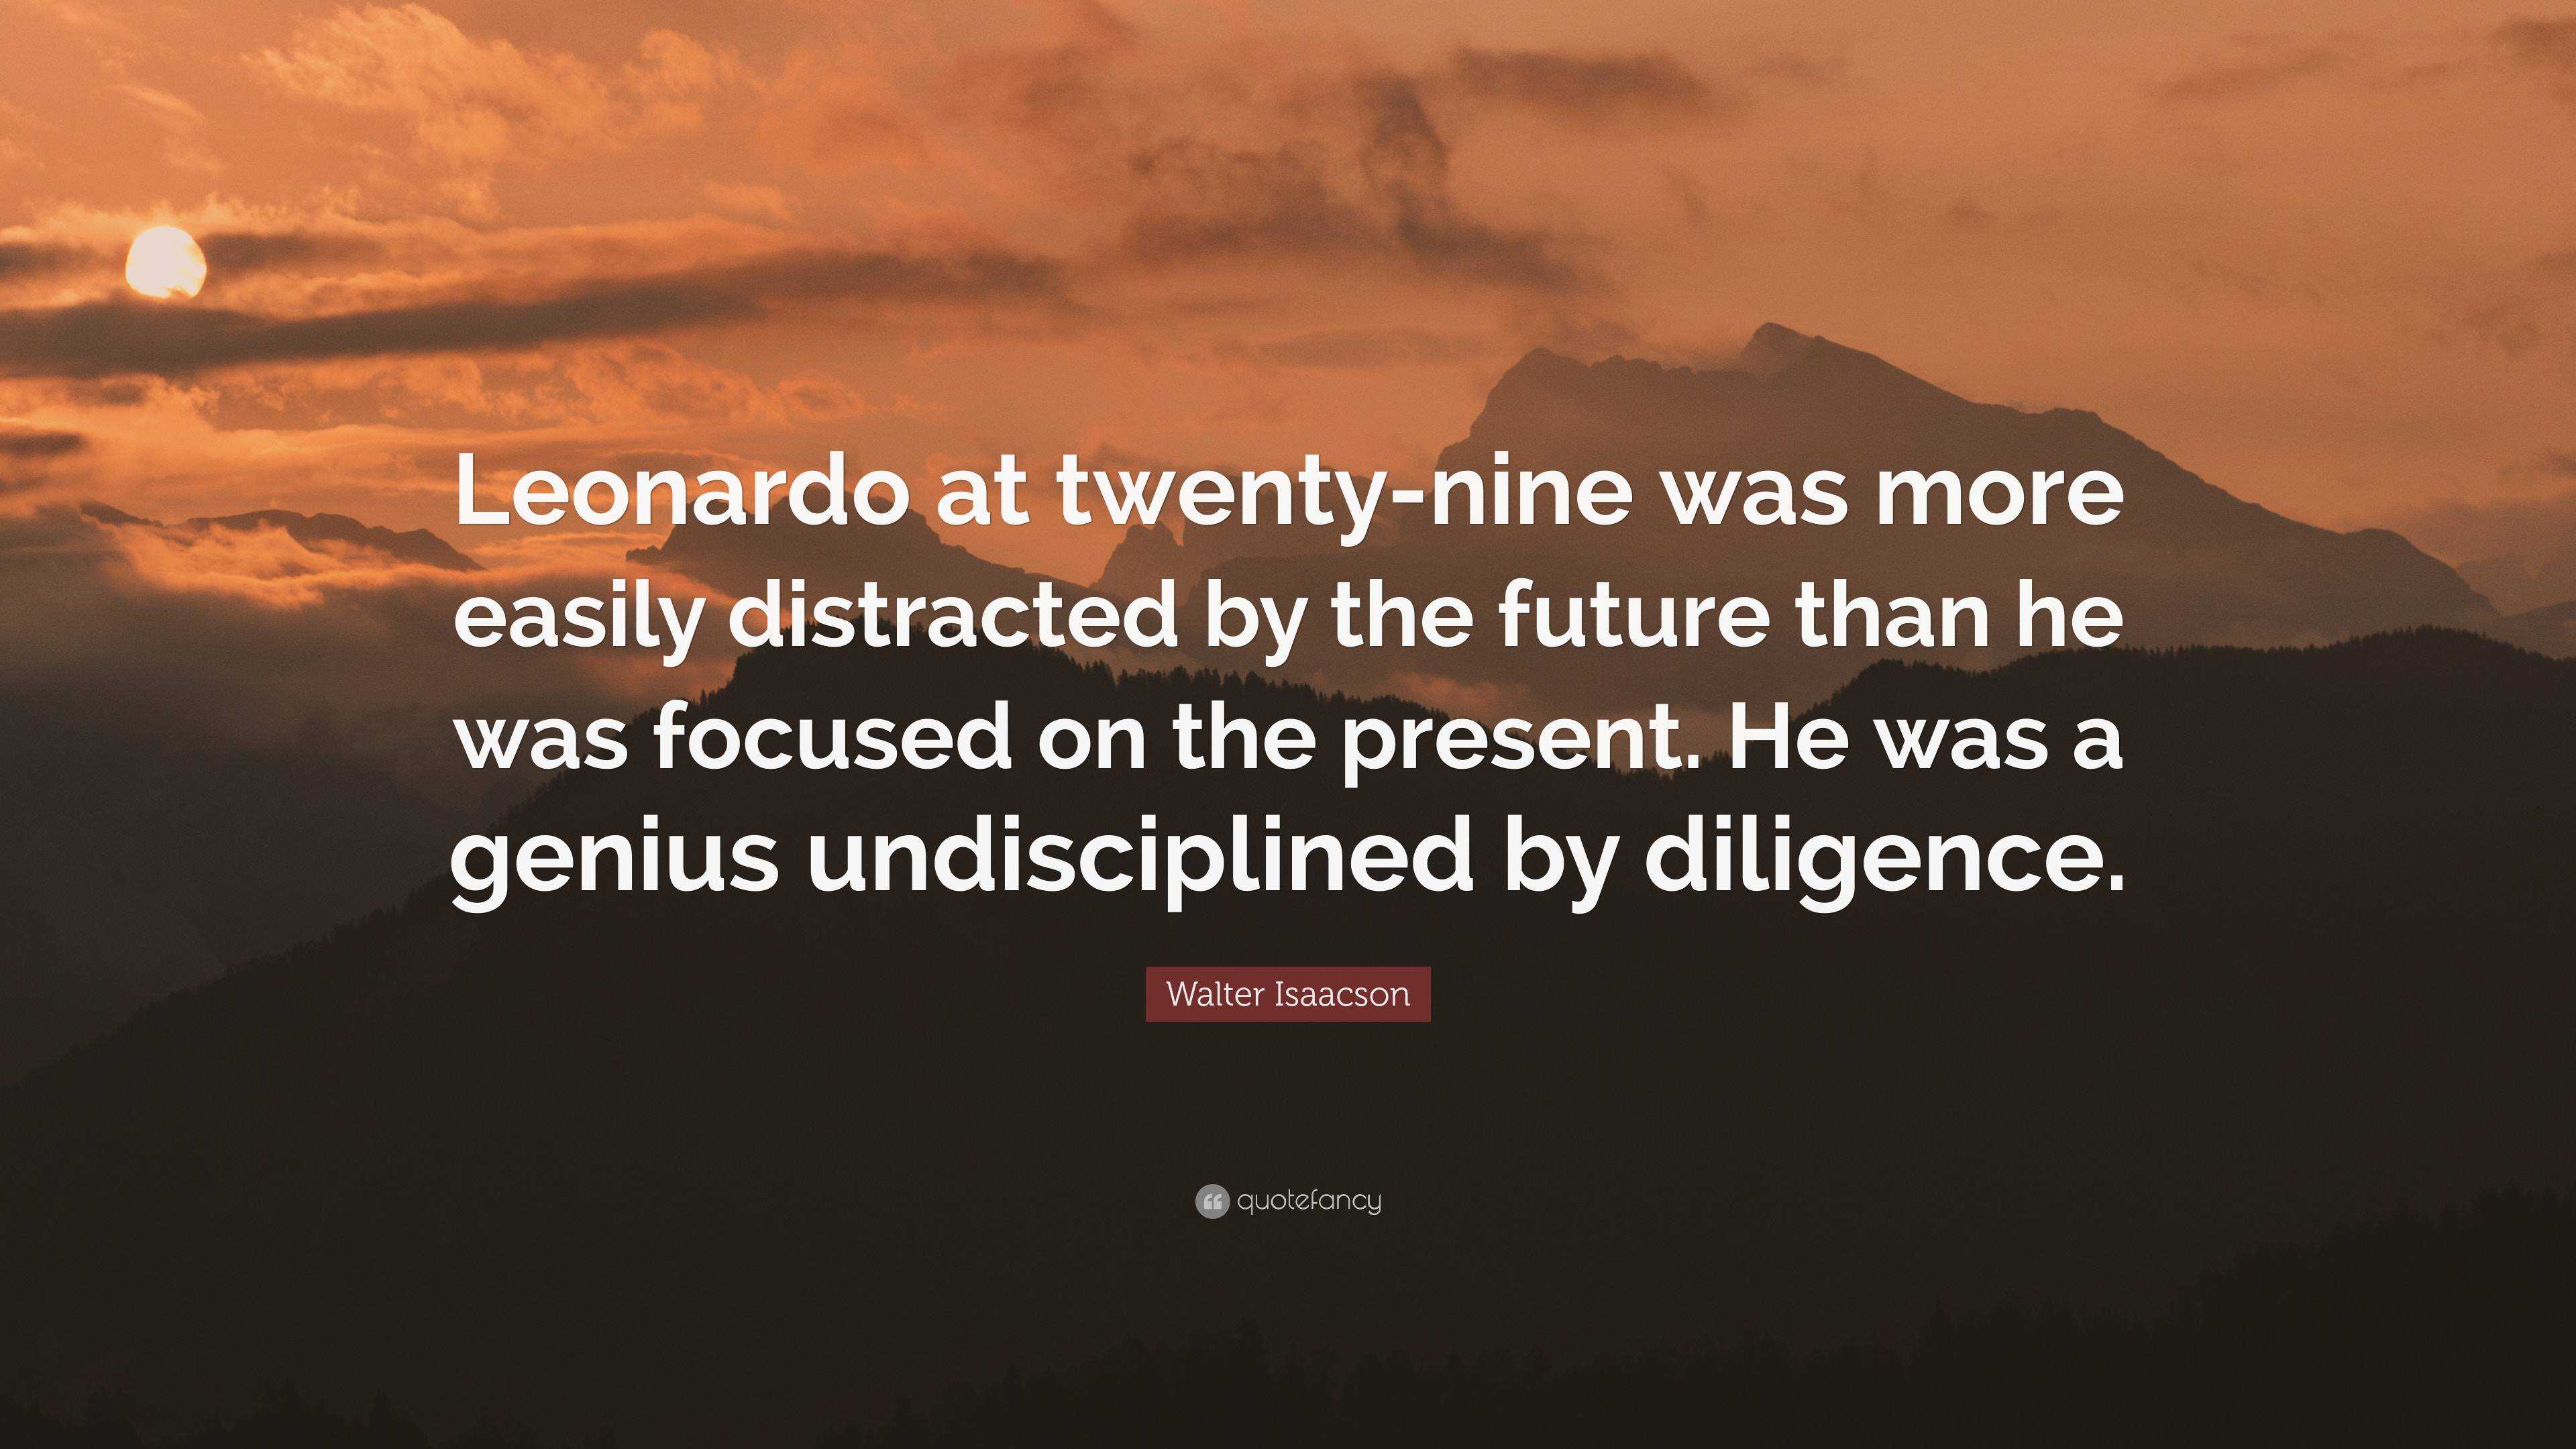 Walter Isaacson Quote: “Leonardo at twenty-nine was more easily ...